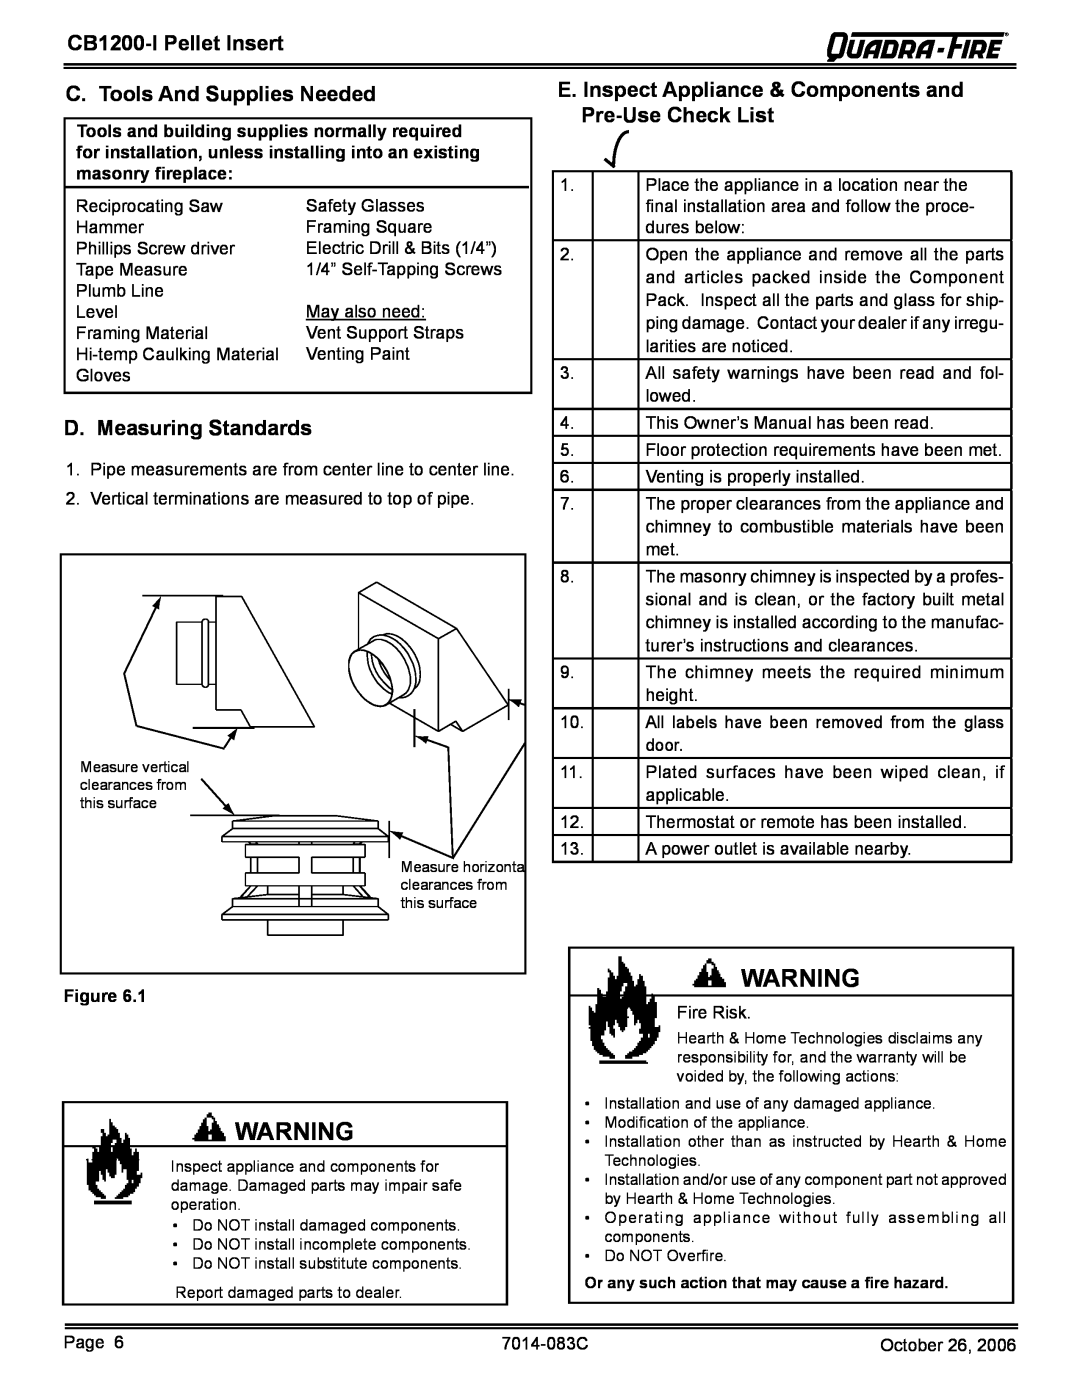 Quadra-Fire CB1200I-B owner manual C. Tools And Supplies Needed, D. Measuring Standards, CB1200-IPellet Insert 